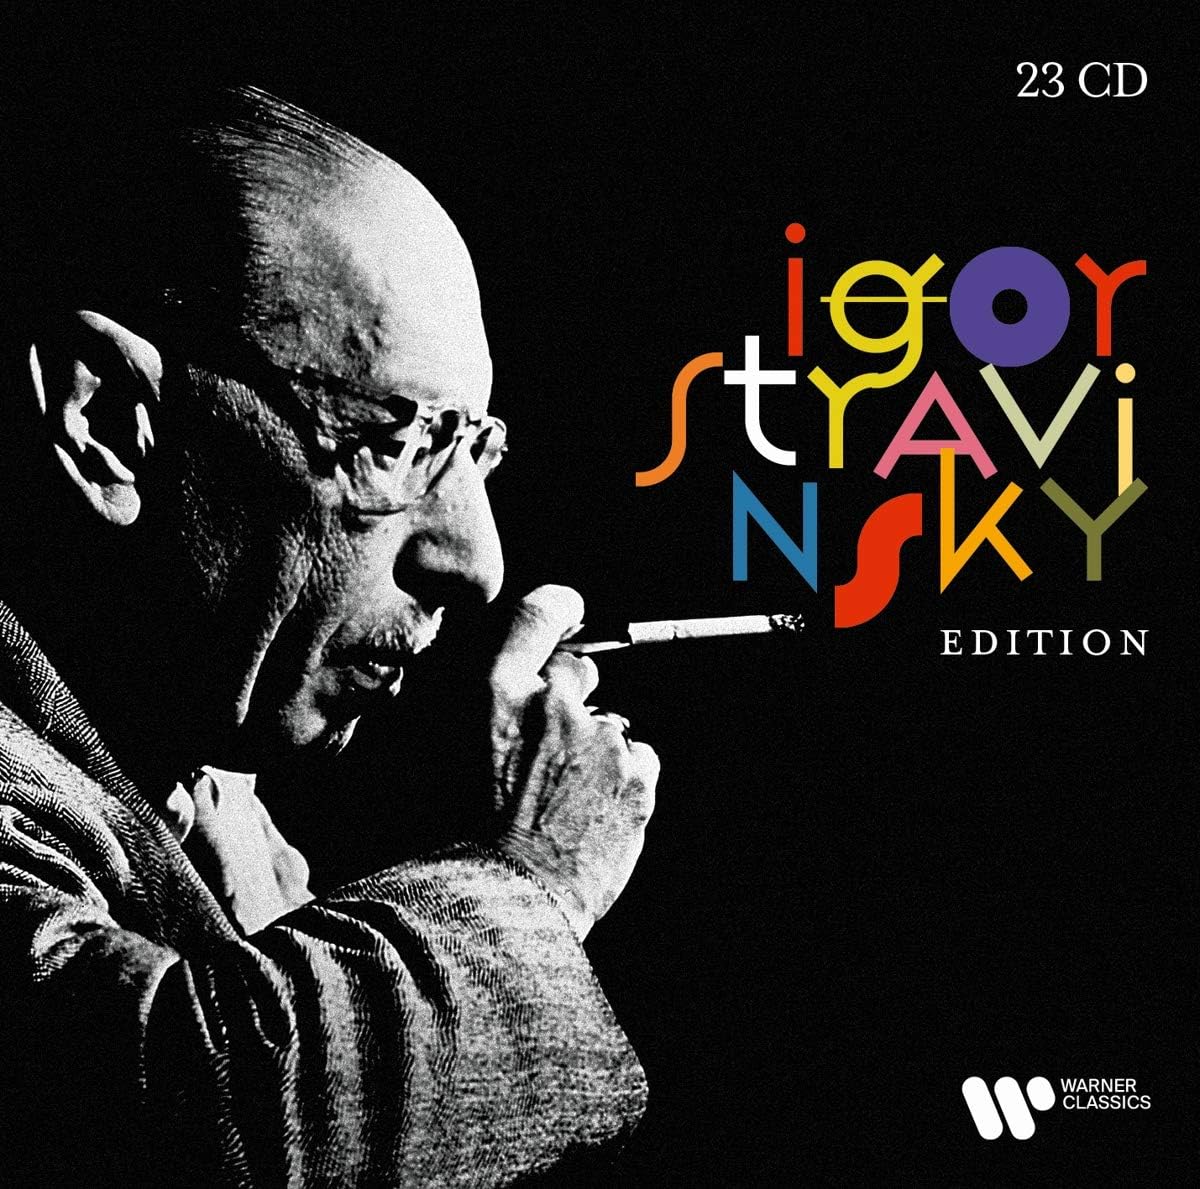 Igor Stravinsky Edition (23CDs Box Set) | Igor Stravinsky